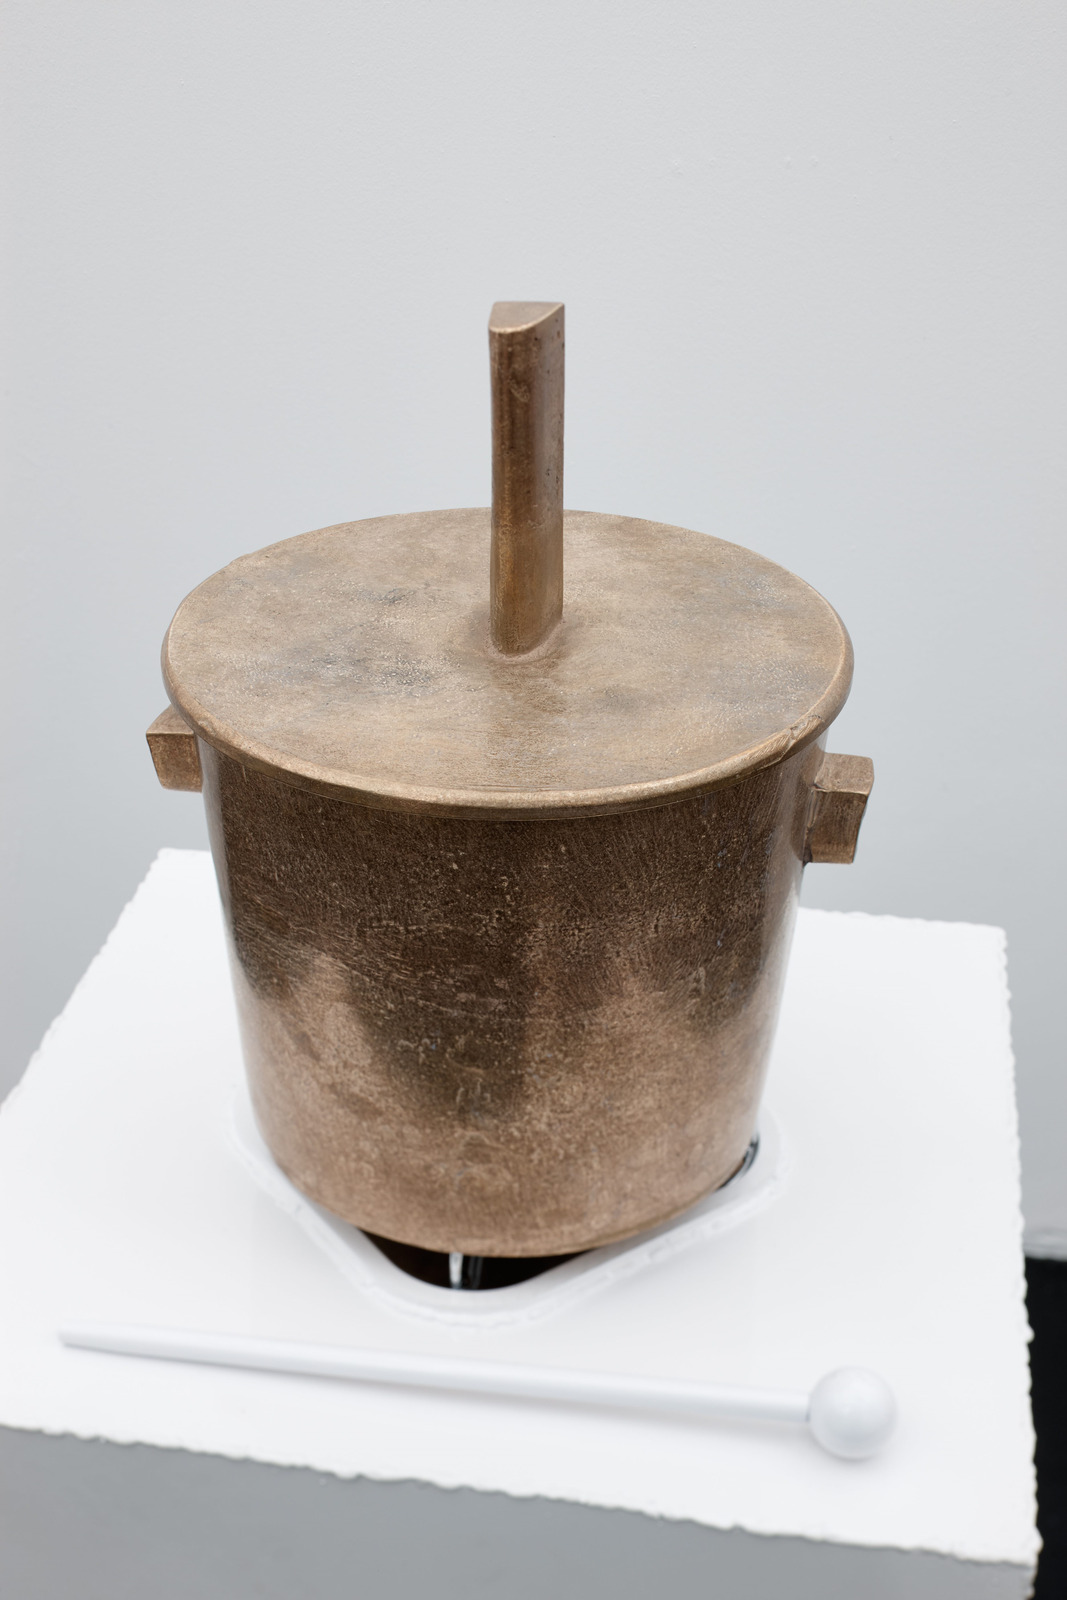 Franz West - Caldare ( A mobile stove sculpture object) Detail (01), 1991